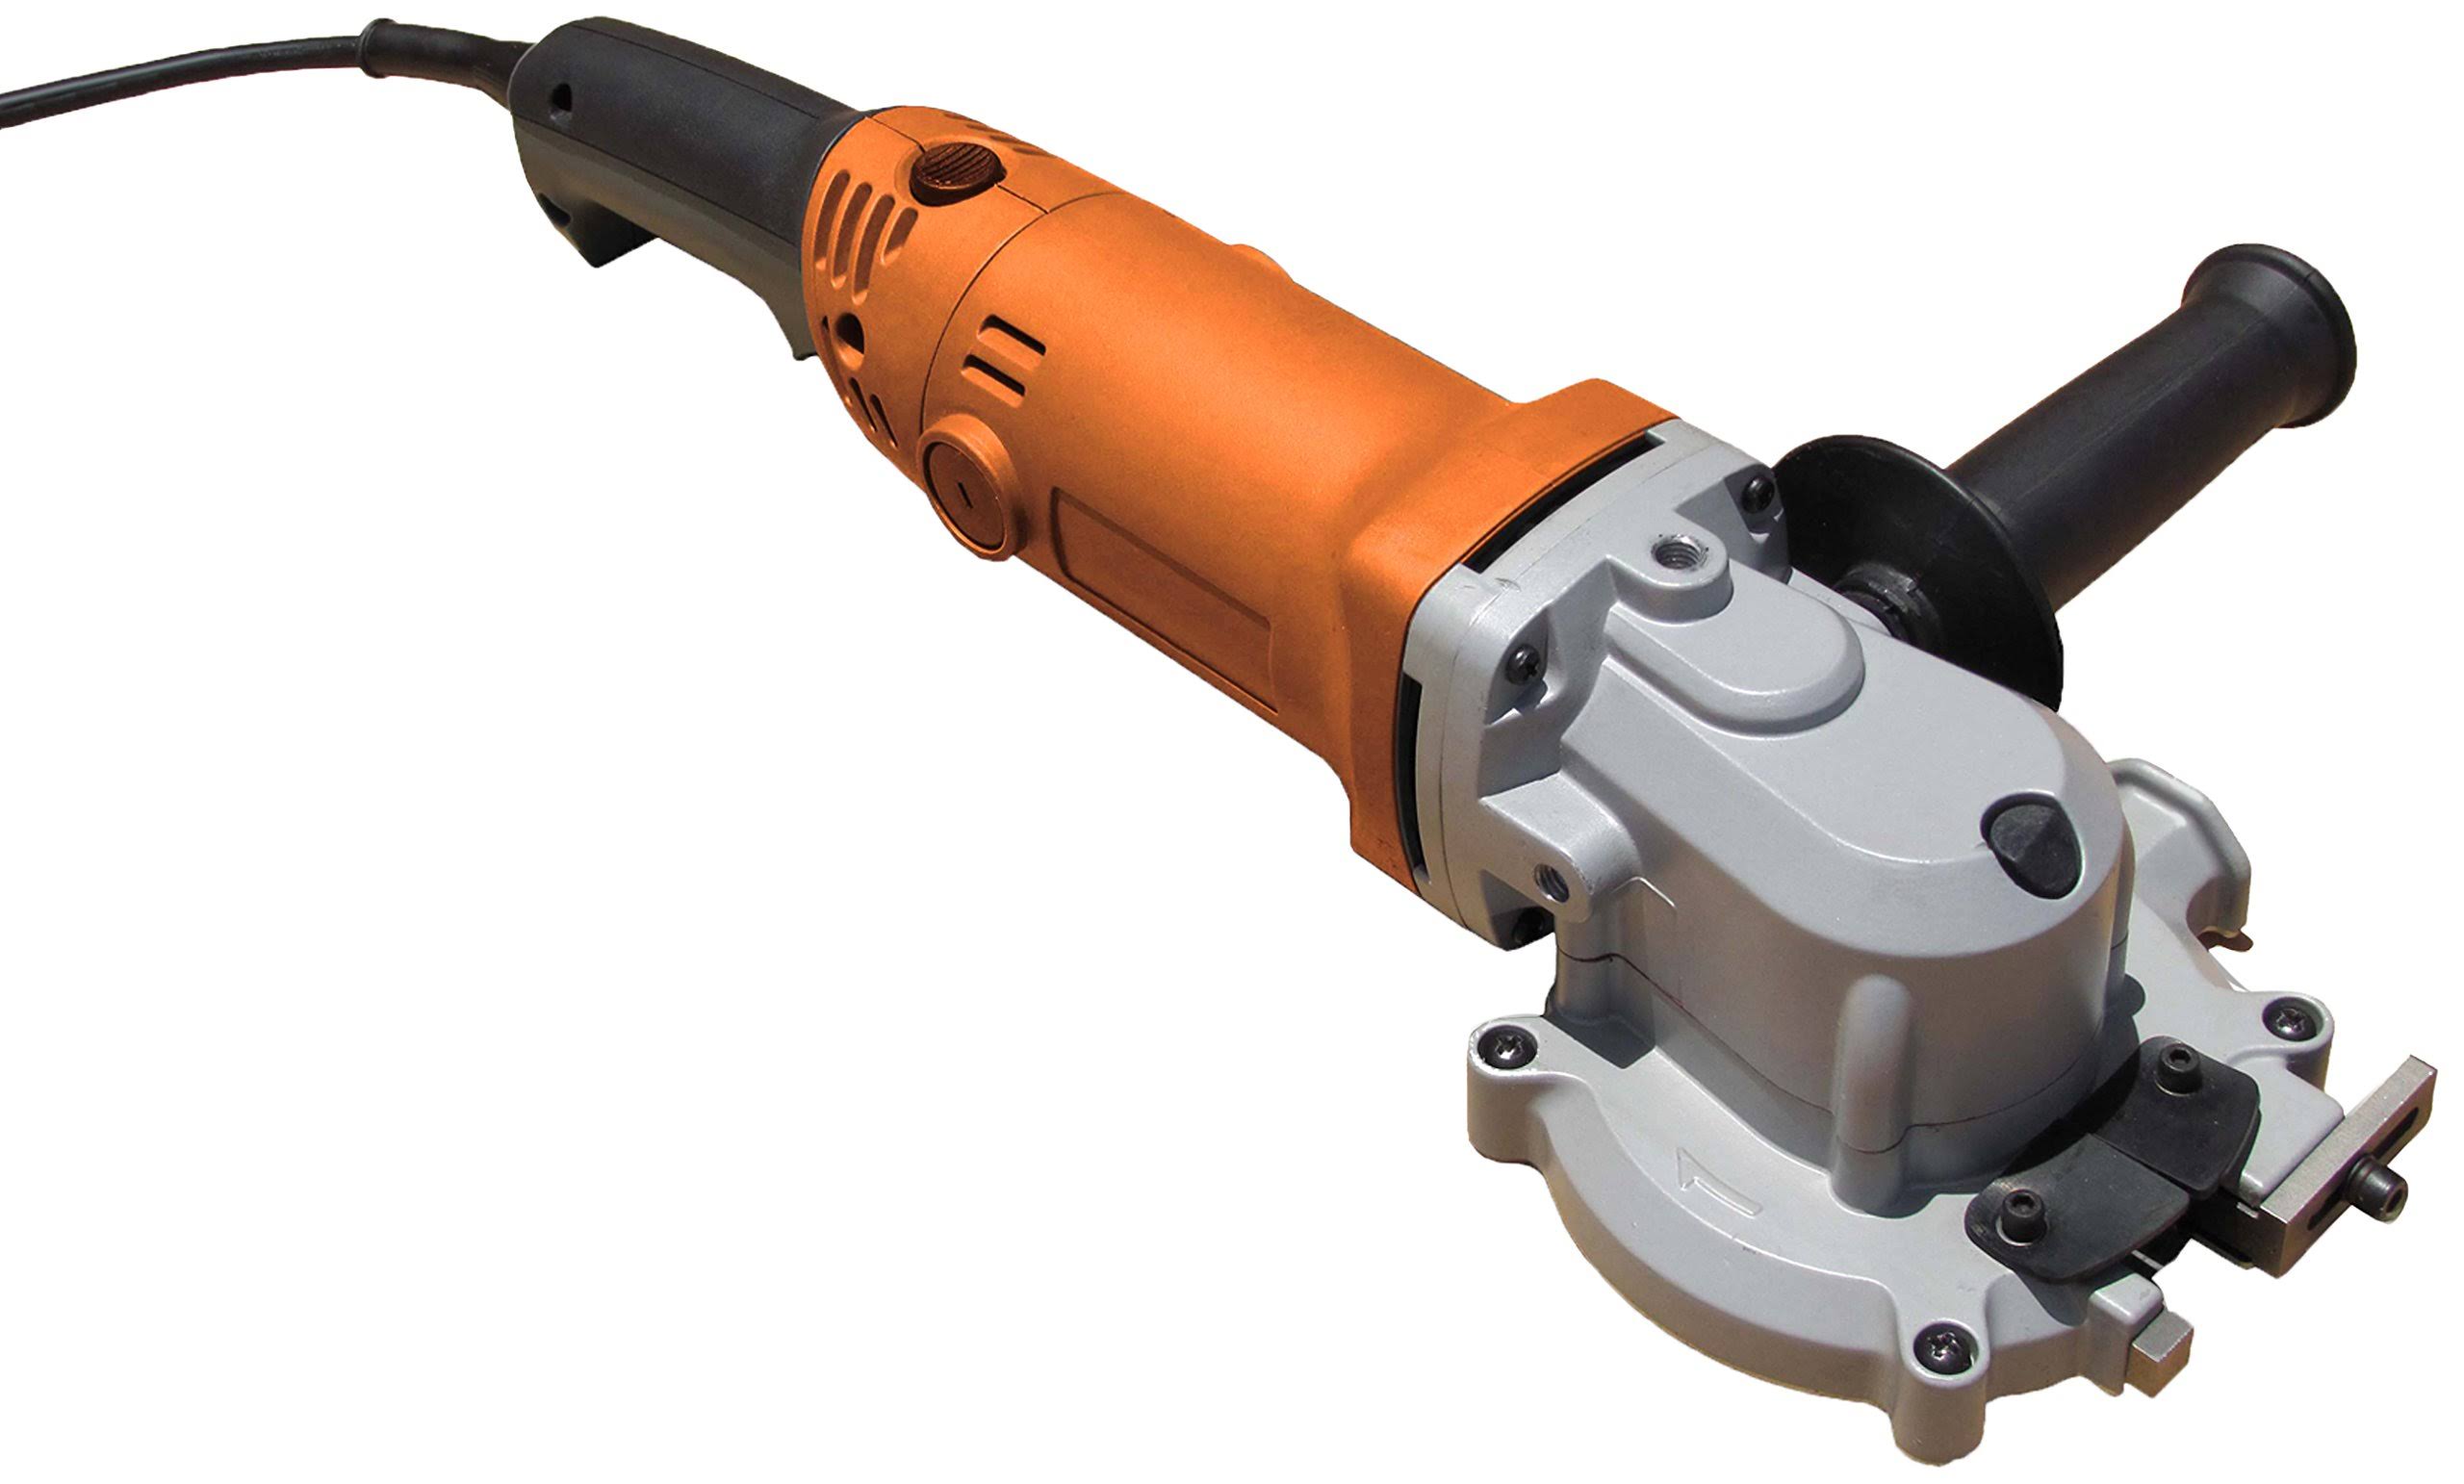 BN Products Bnce-20 Rebar Cutter Kit - Orange